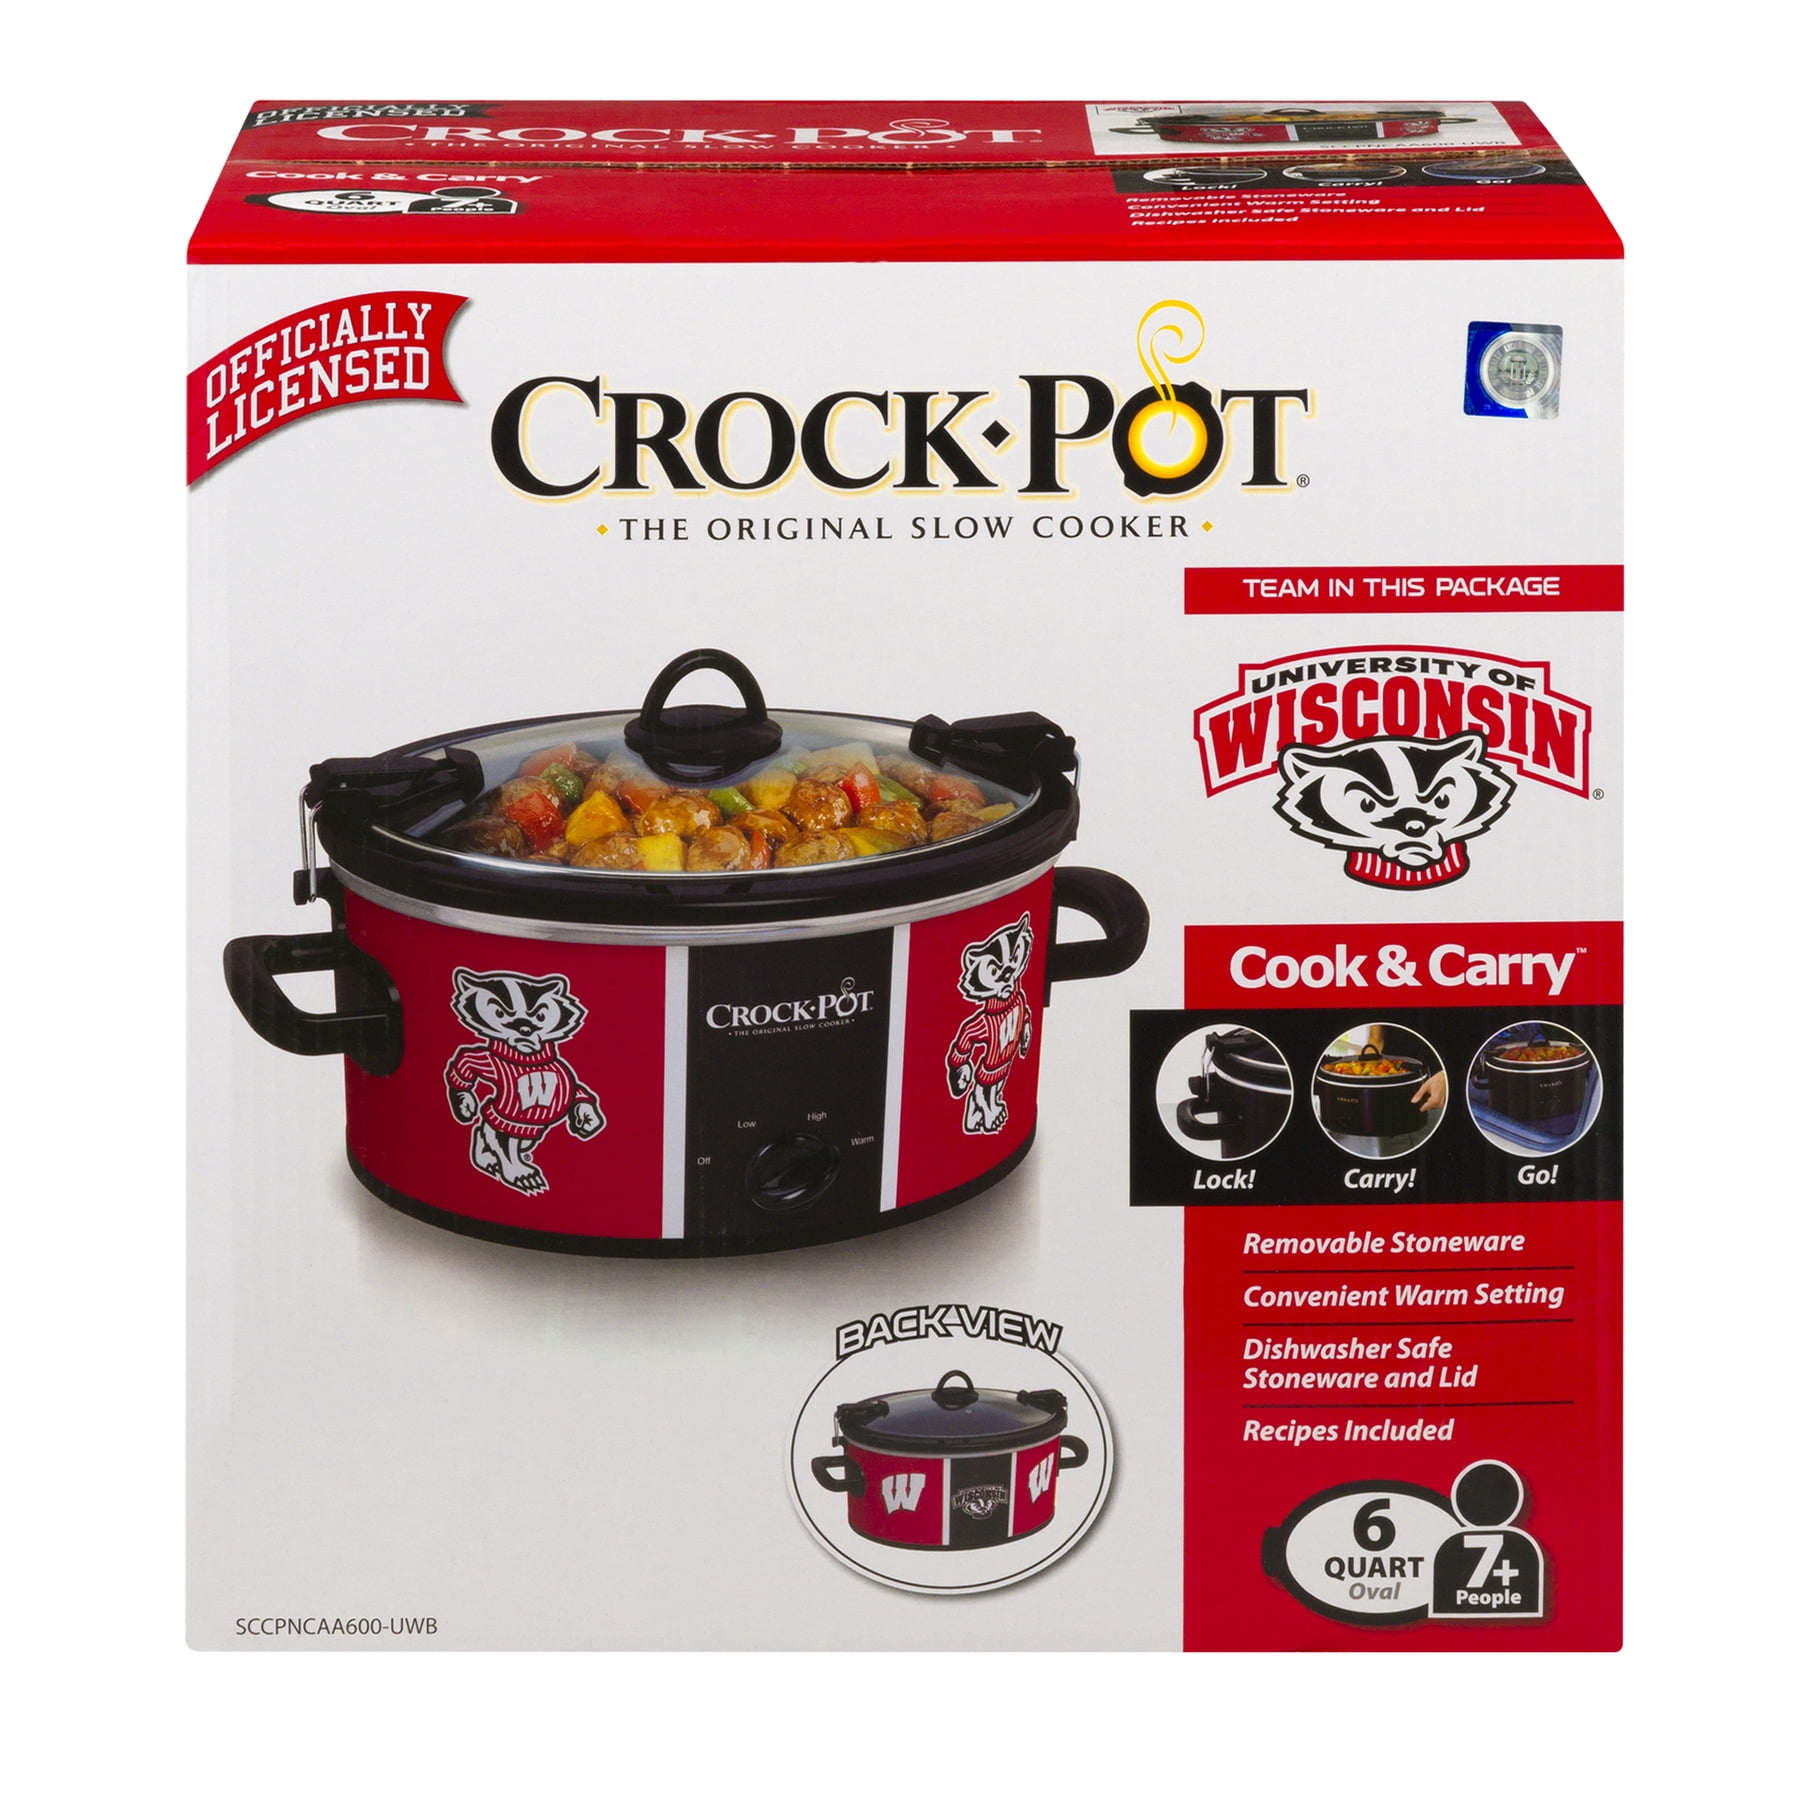  Crock-Pot 6-Quart Wifi-Enabled Slow Cooker Only $86.46